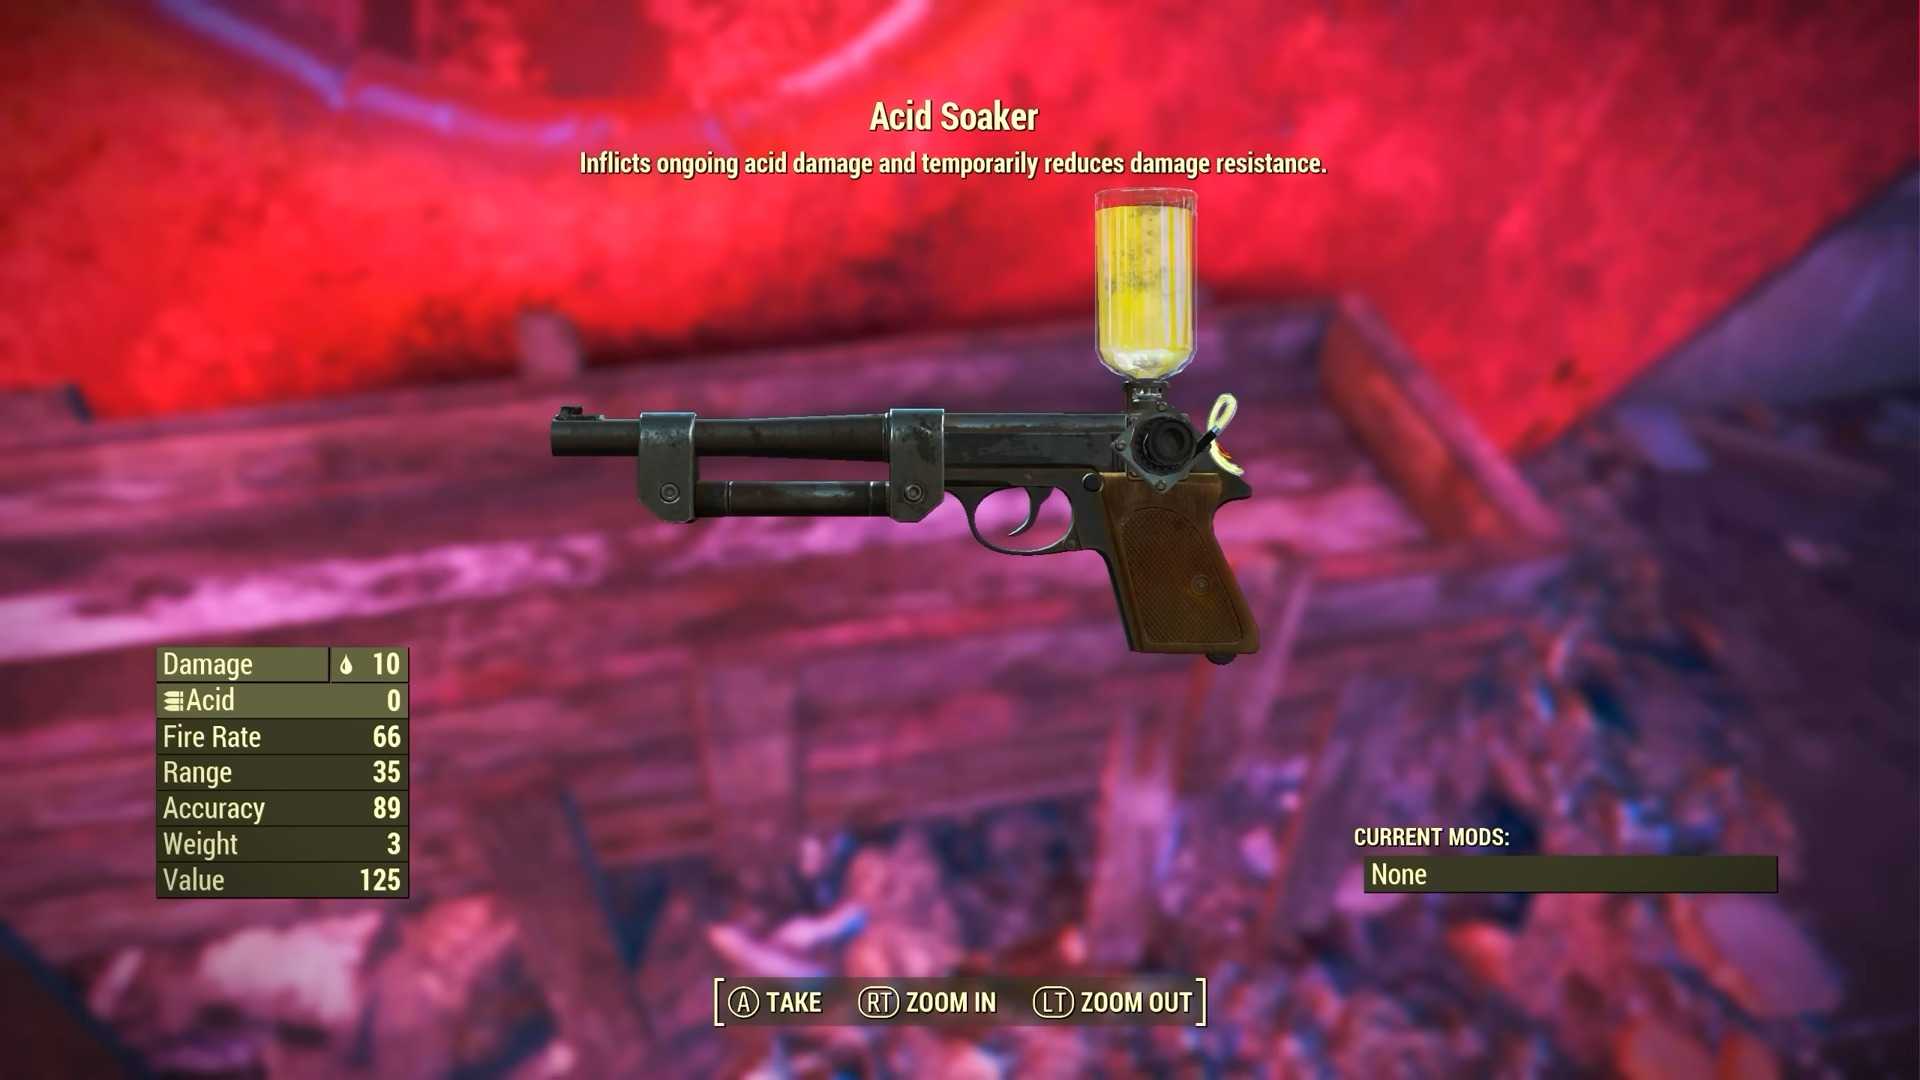 Acid Soaker in Fallout 4